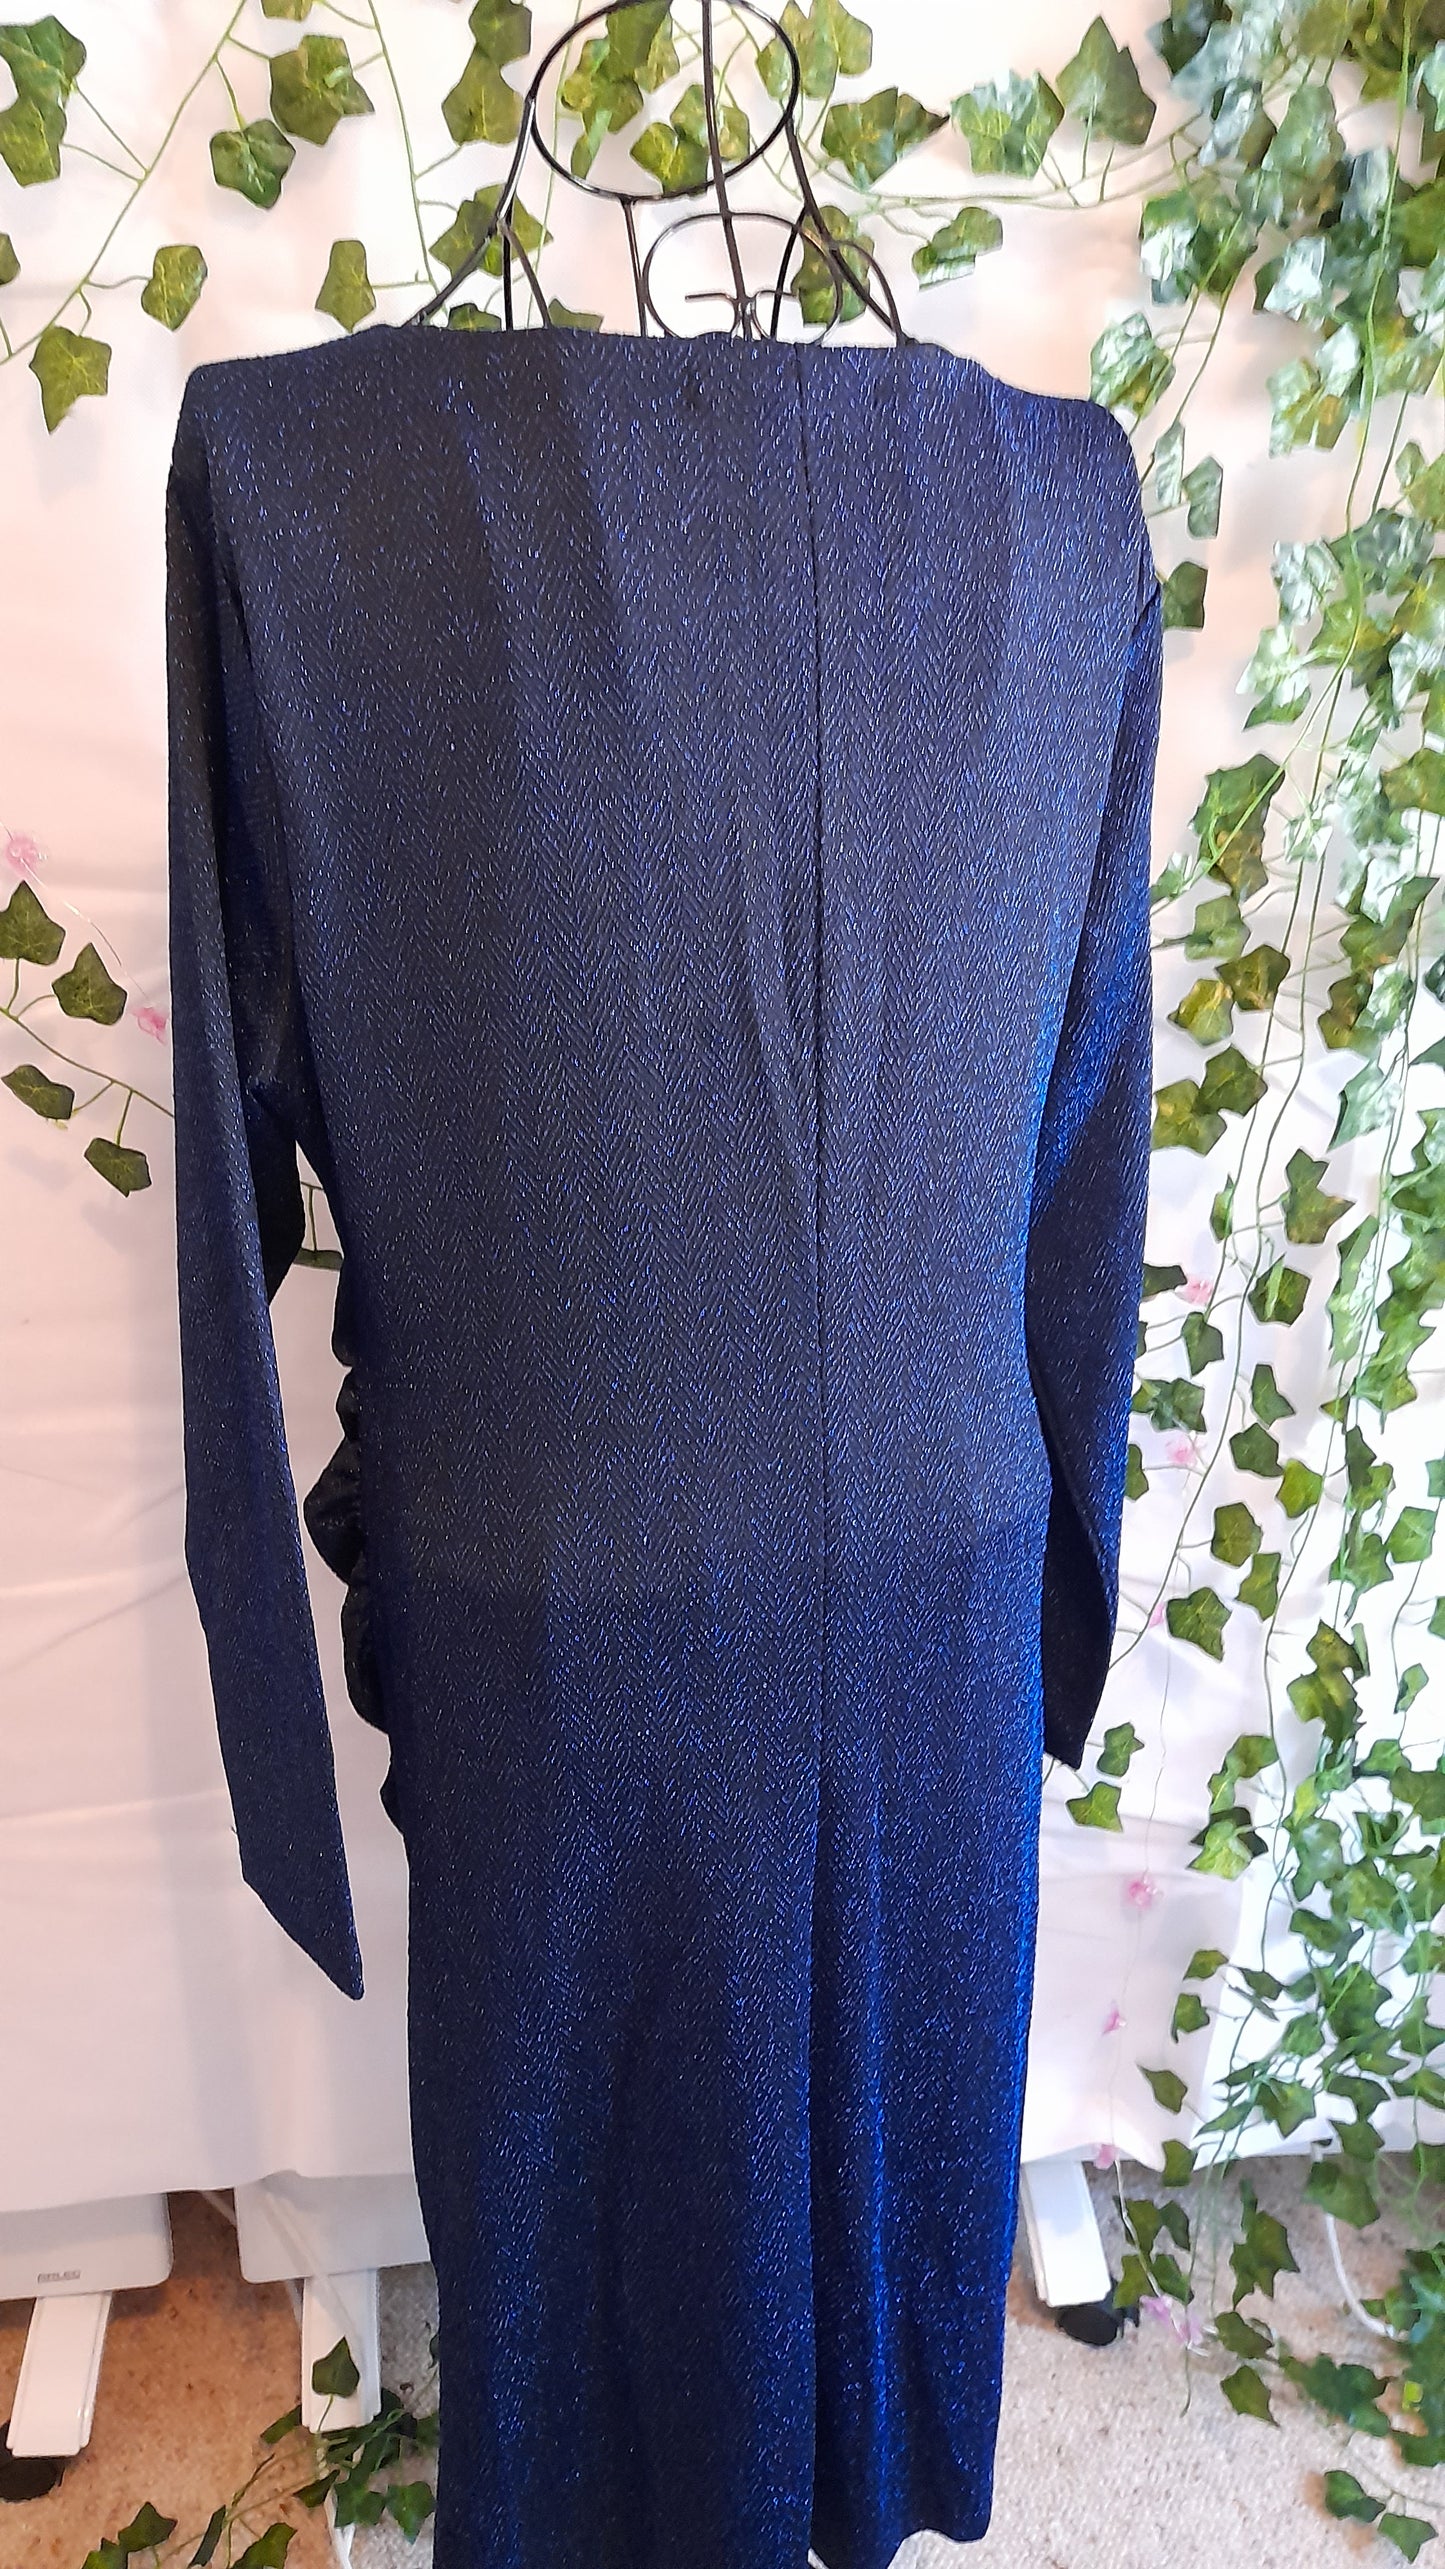 Dress - Liz Jordan Black & Blue Sparkle Evening Size 14